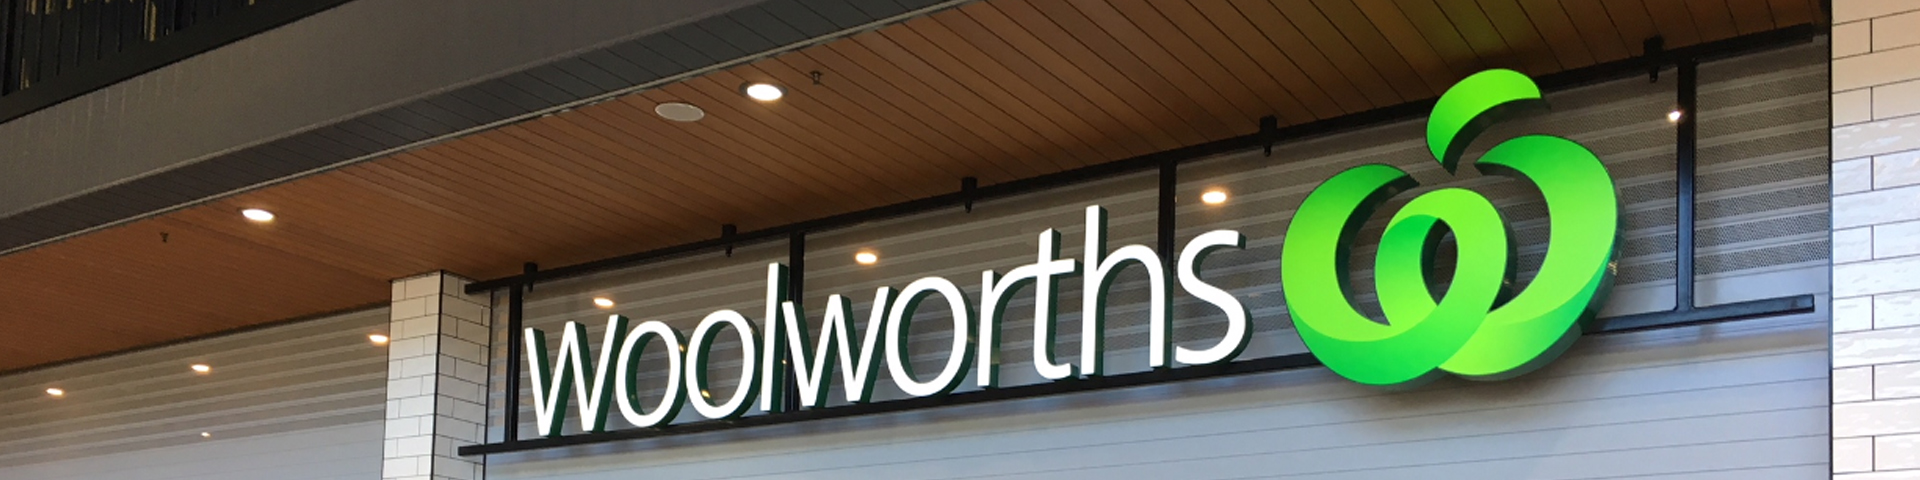 Woolworths Supermarket Image